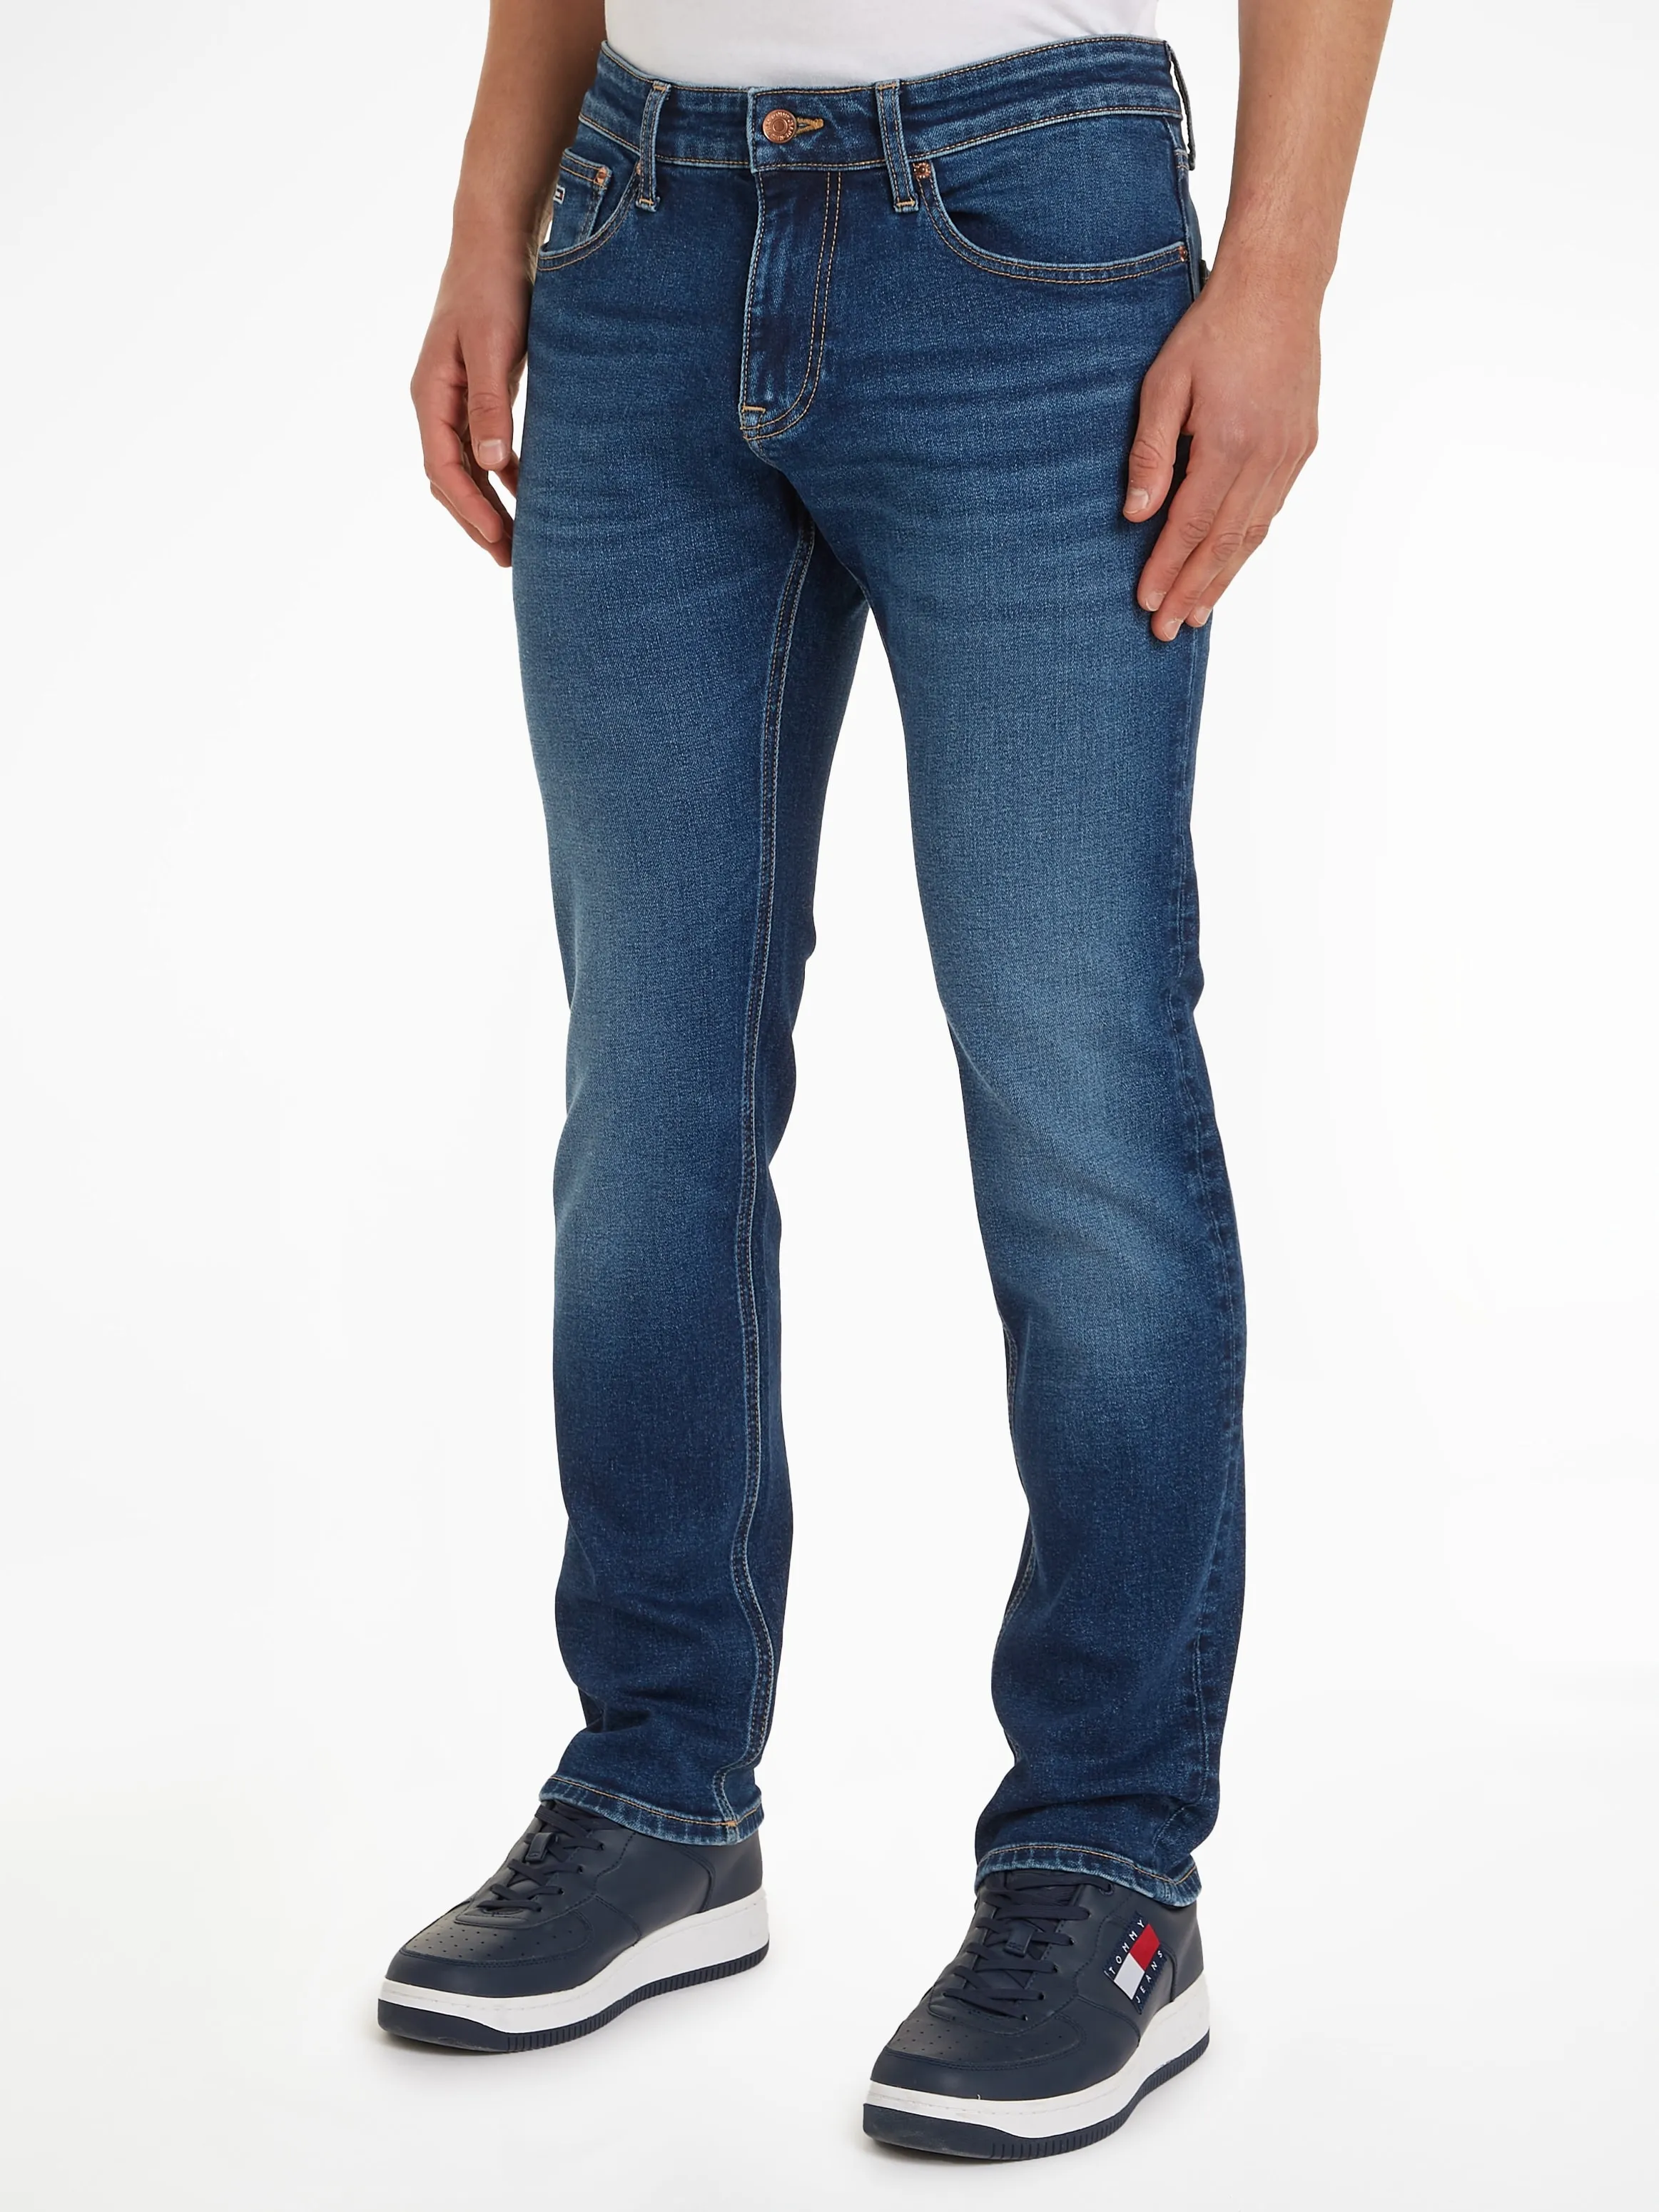 Slim-fit-Jeans TOMMY JEANS "SCANTON SLIM" Gr. 31, Länge 30, blau (denim dark) Herren Jeans Slim Fit im 5-Pocket-Style